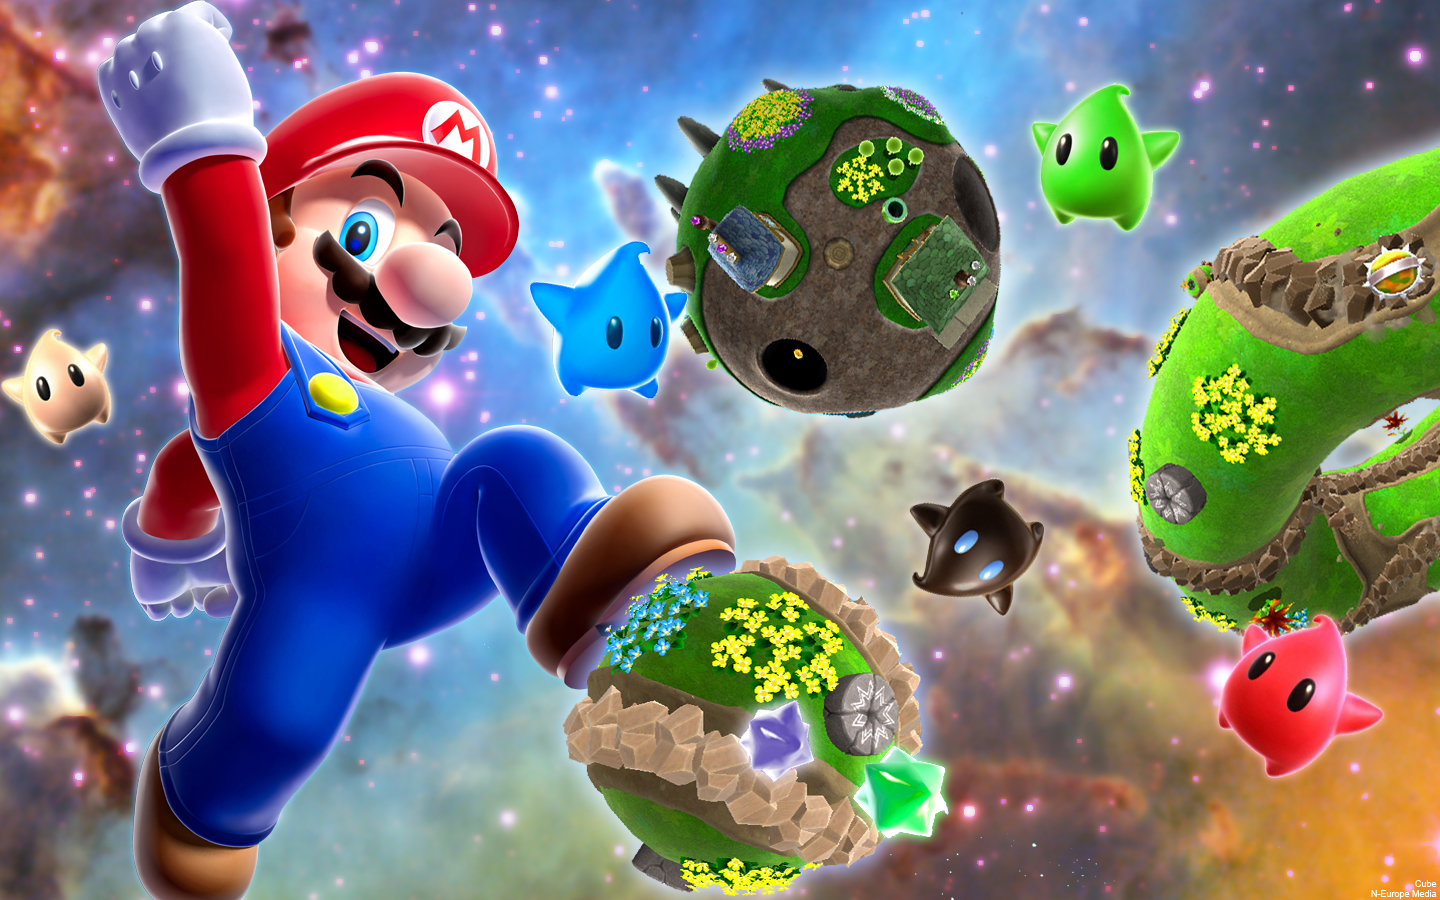 Download hd 1440x900 Super Mario Galaxy 2 desktop background ID:7747 for free